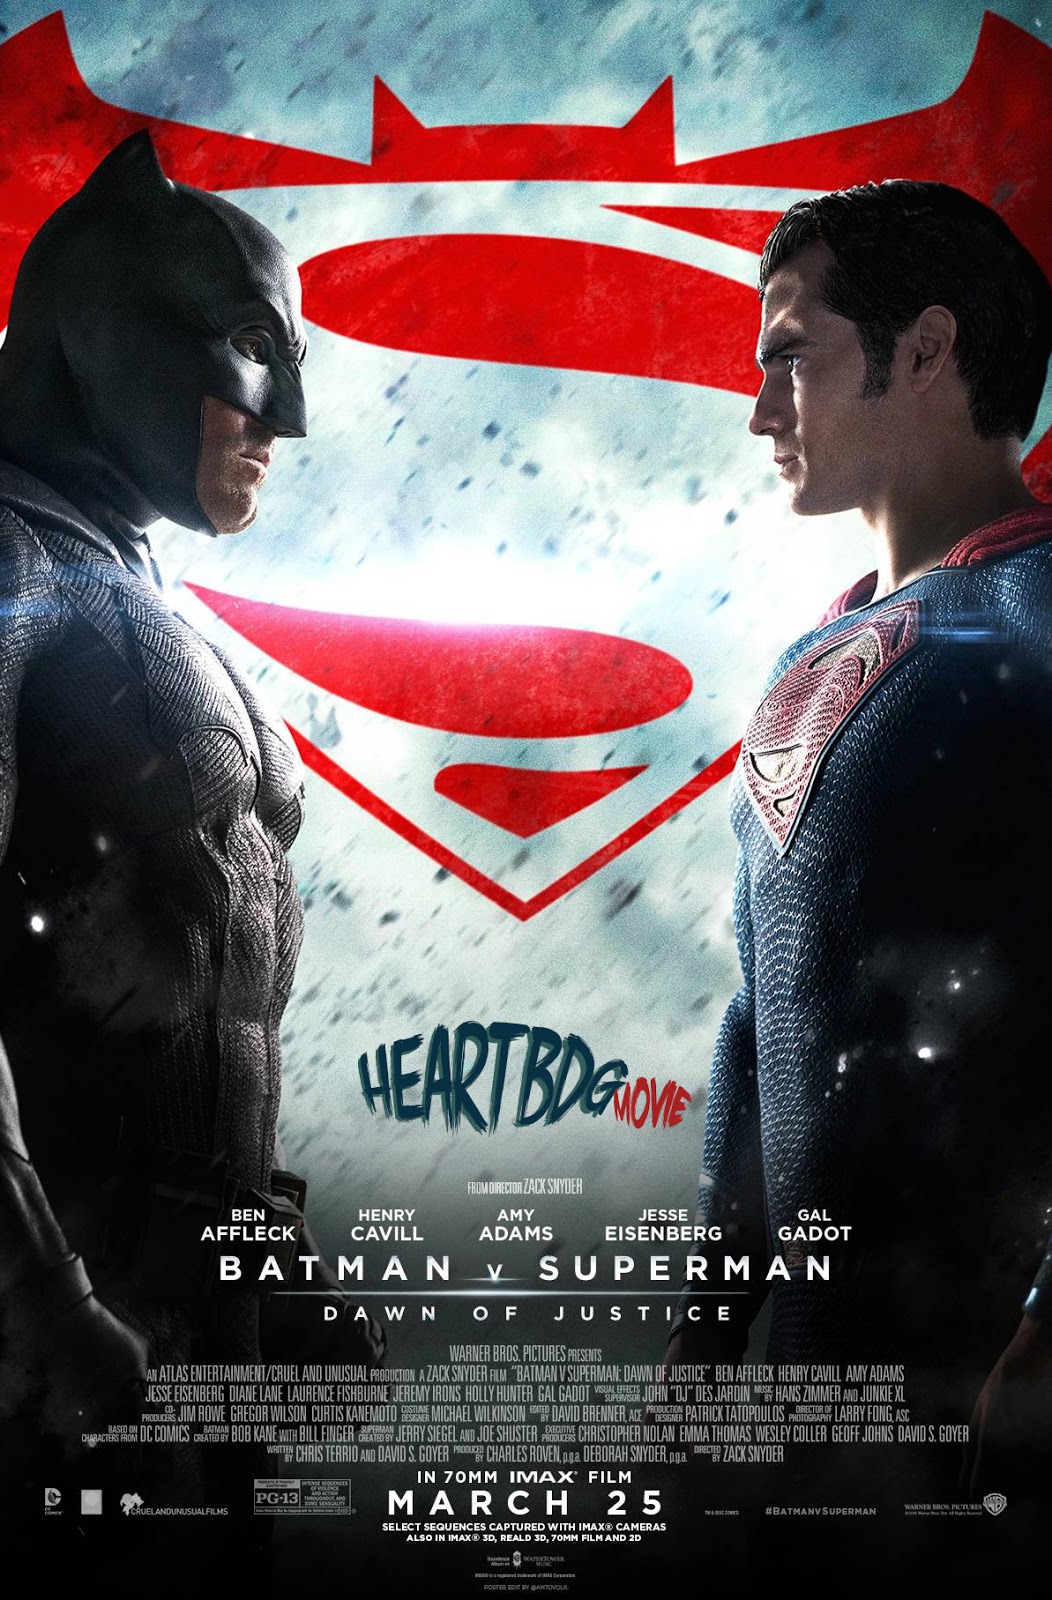 Free Download Film BATMAN V SUPERMAN (2016) HD 720p Sub Indo - Heartbdg